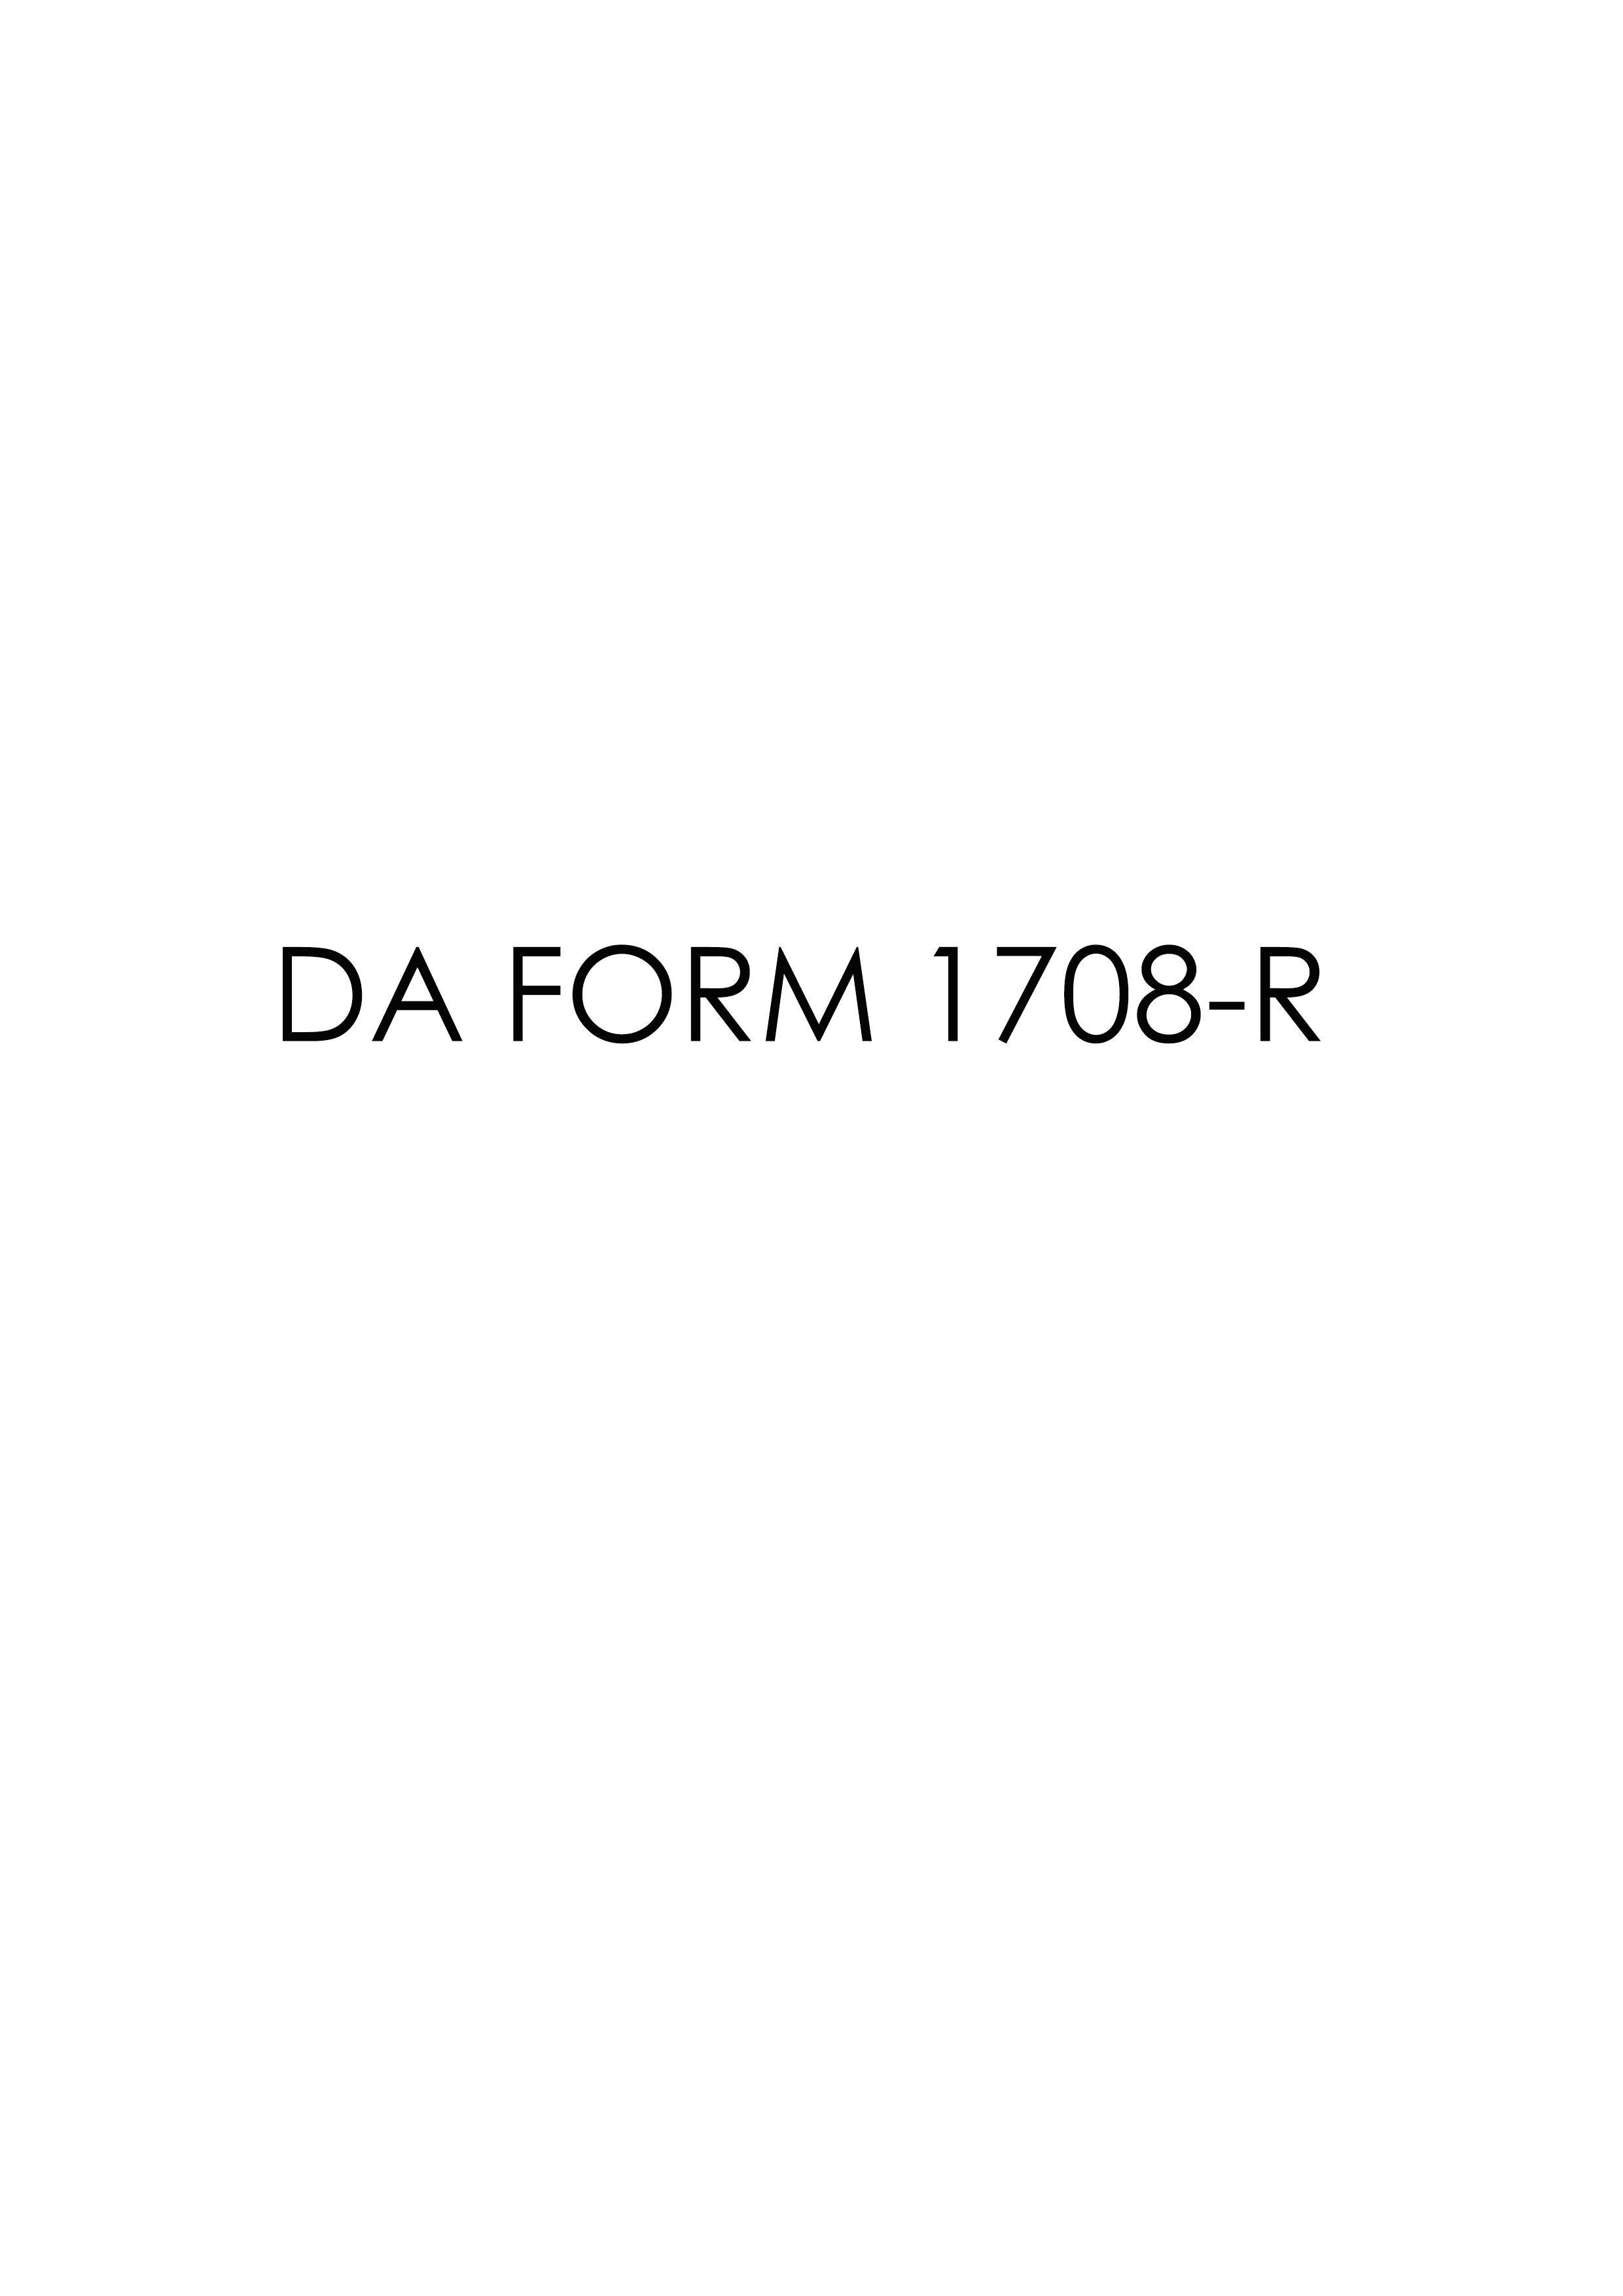 da Form 1708-R fillable